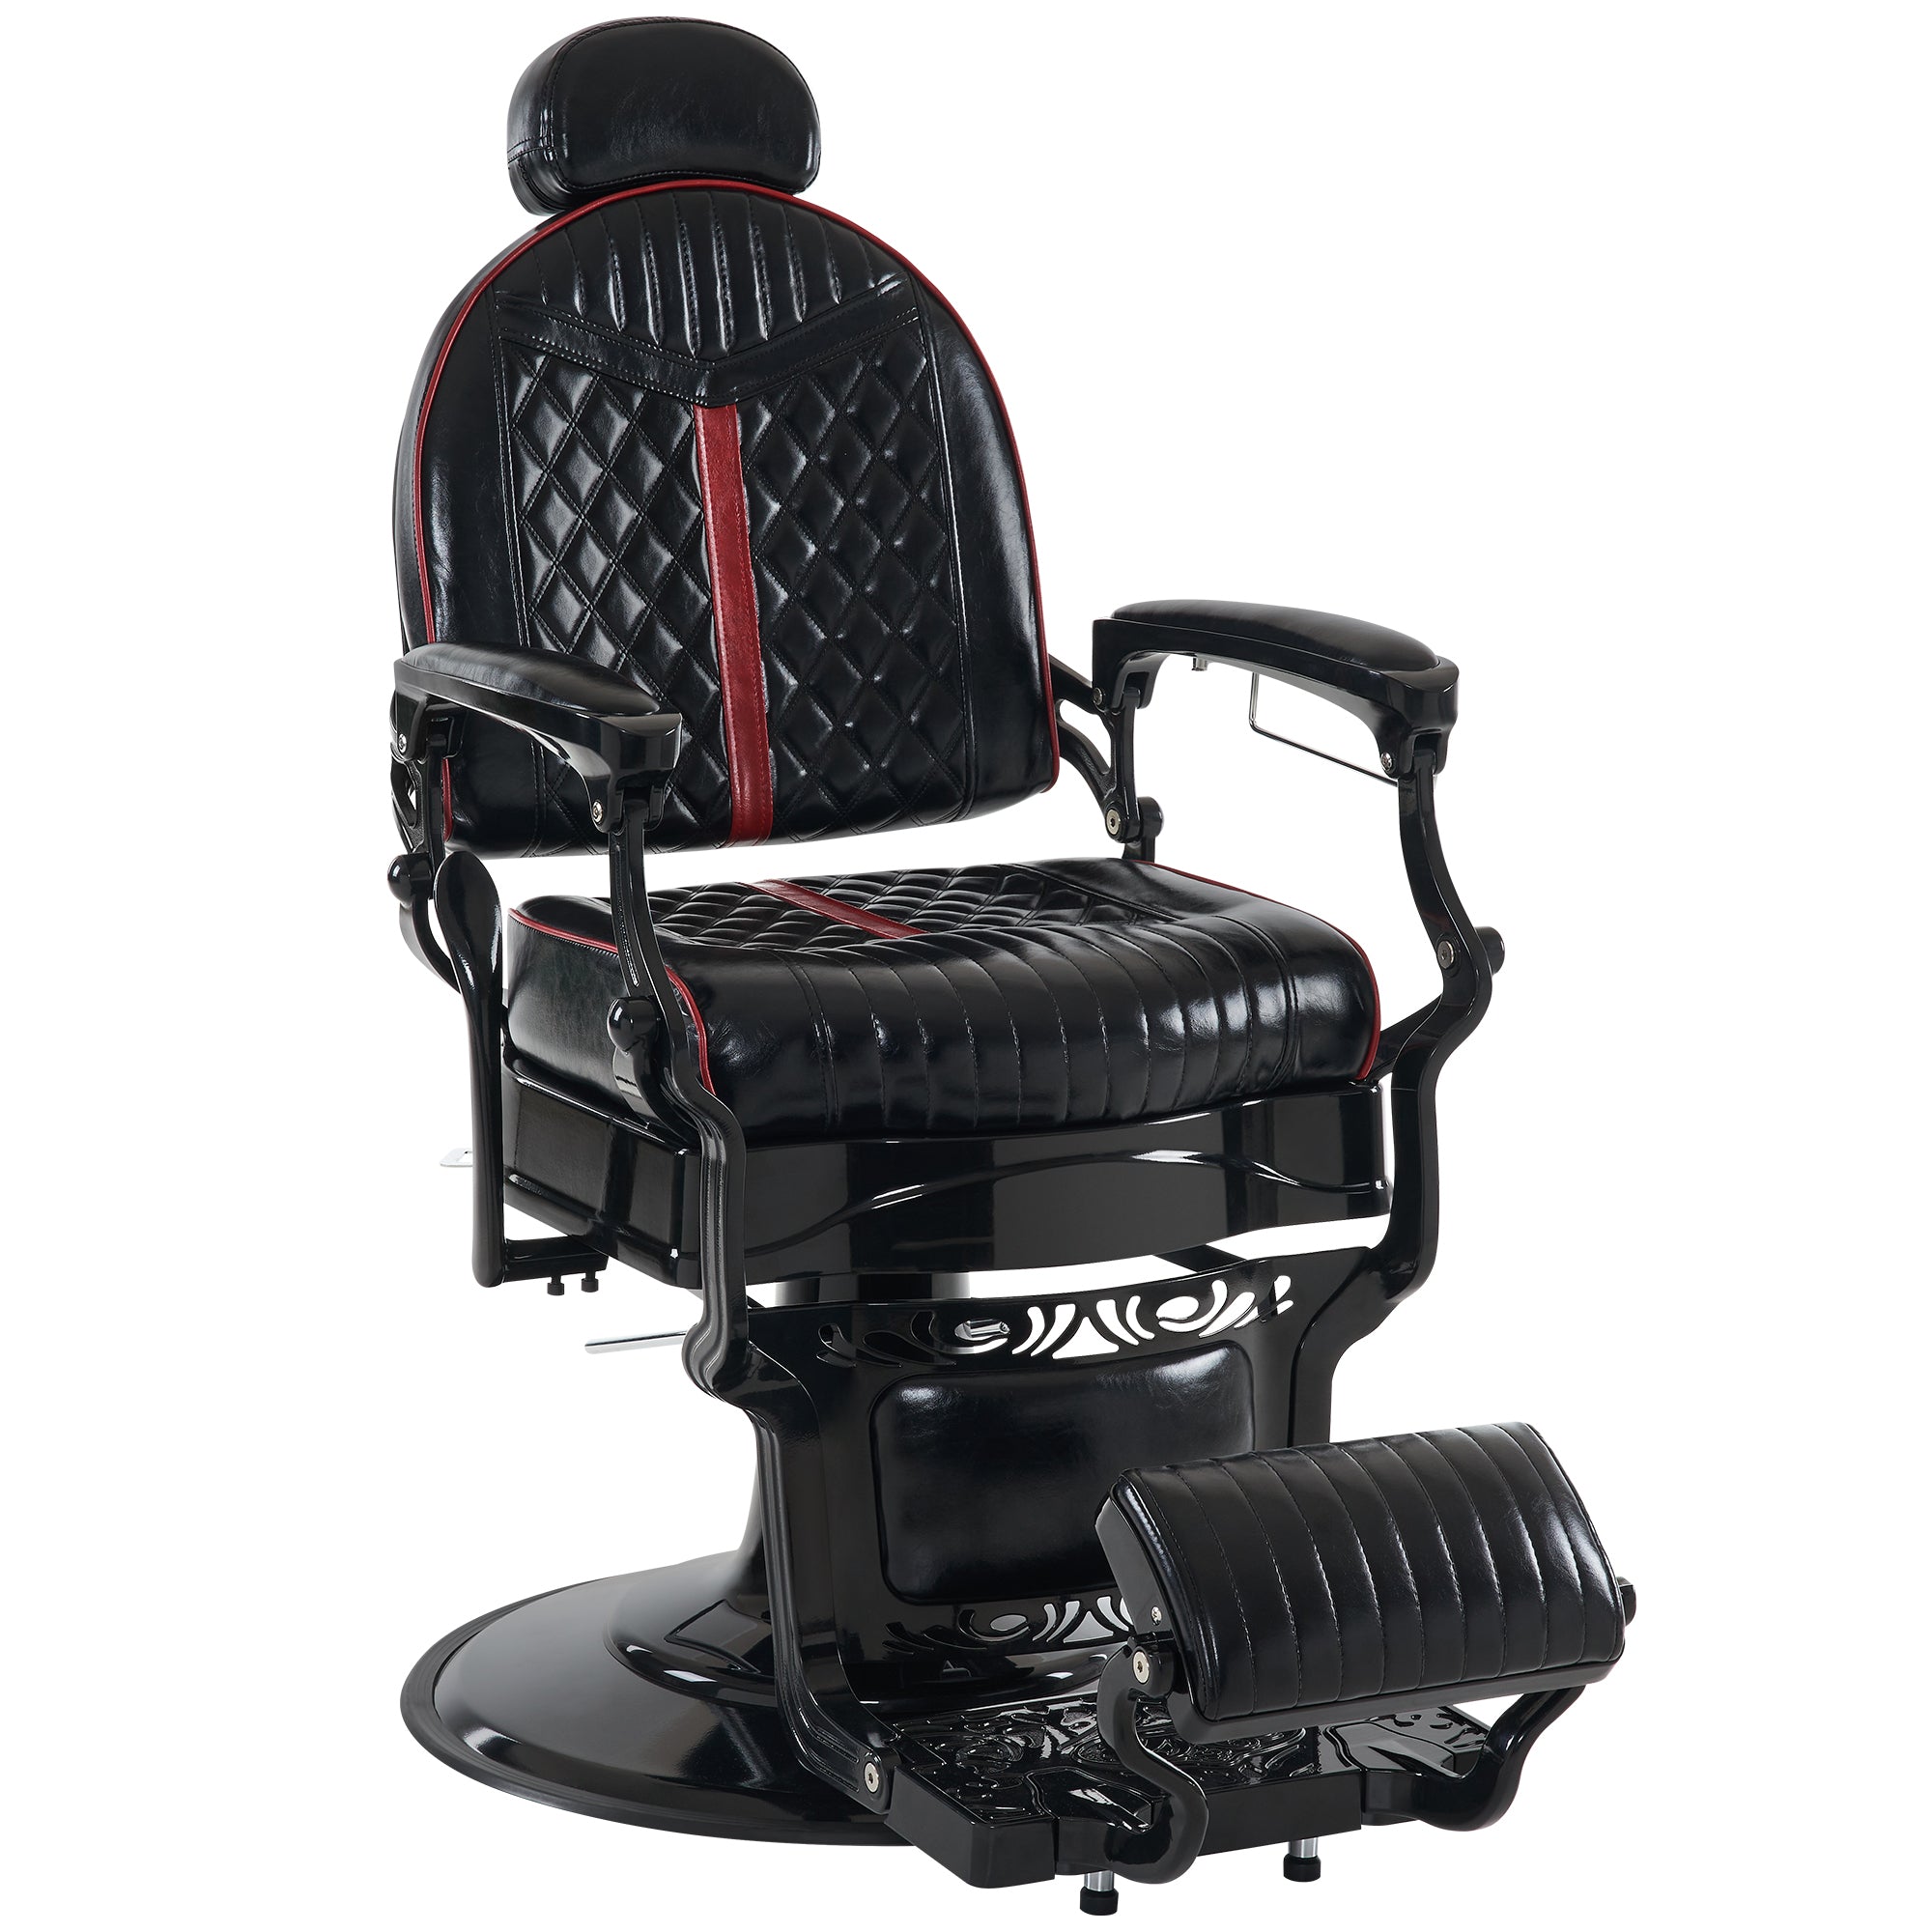 BarberPub Vintage Barber Chair Professional Hydraulic Reclining Salon Chair Equipment 8730